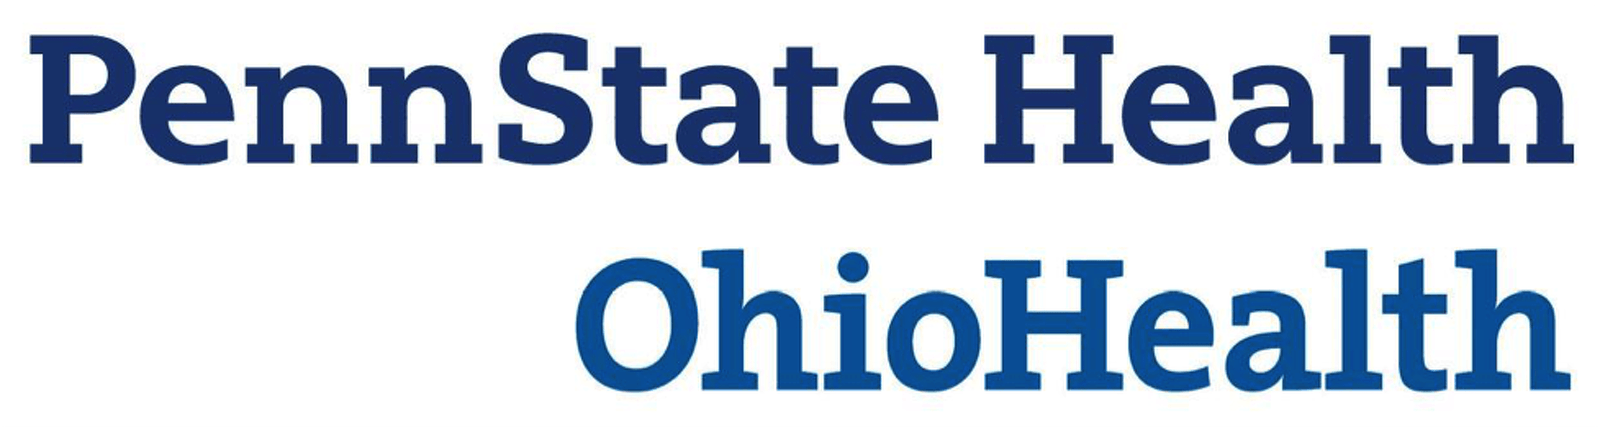 OhioHealth Logo - State College, PA - A Familiar Font -